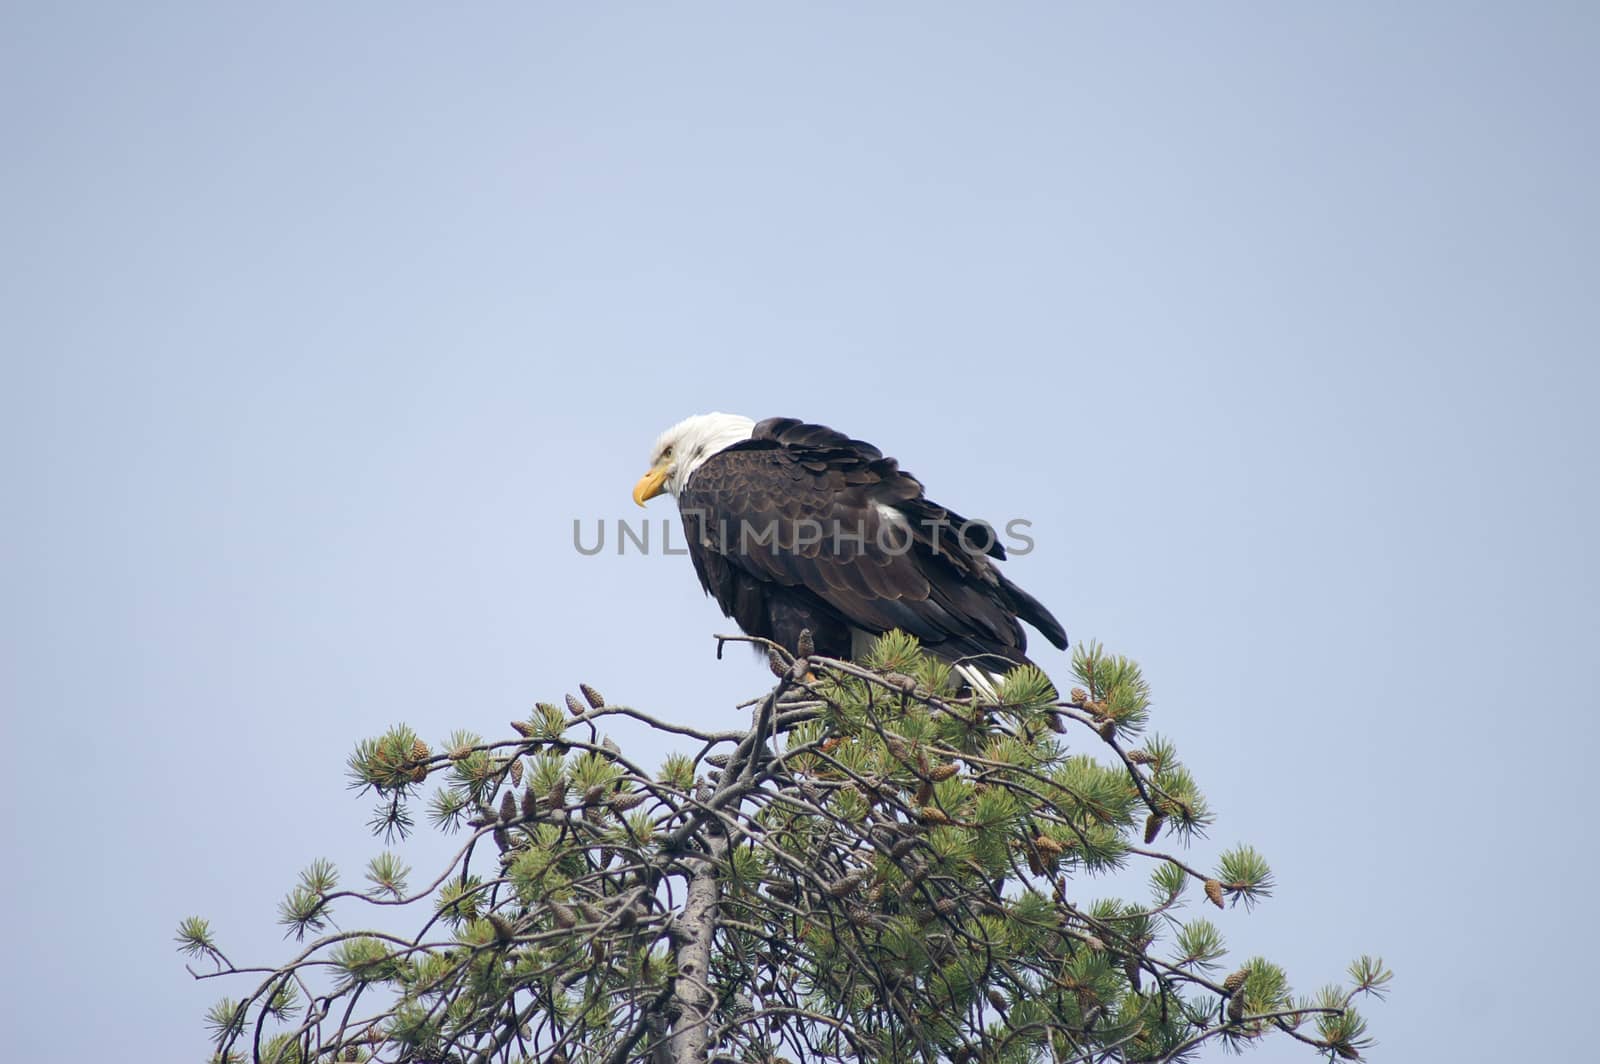 Bald eagle looking for prey by emattil